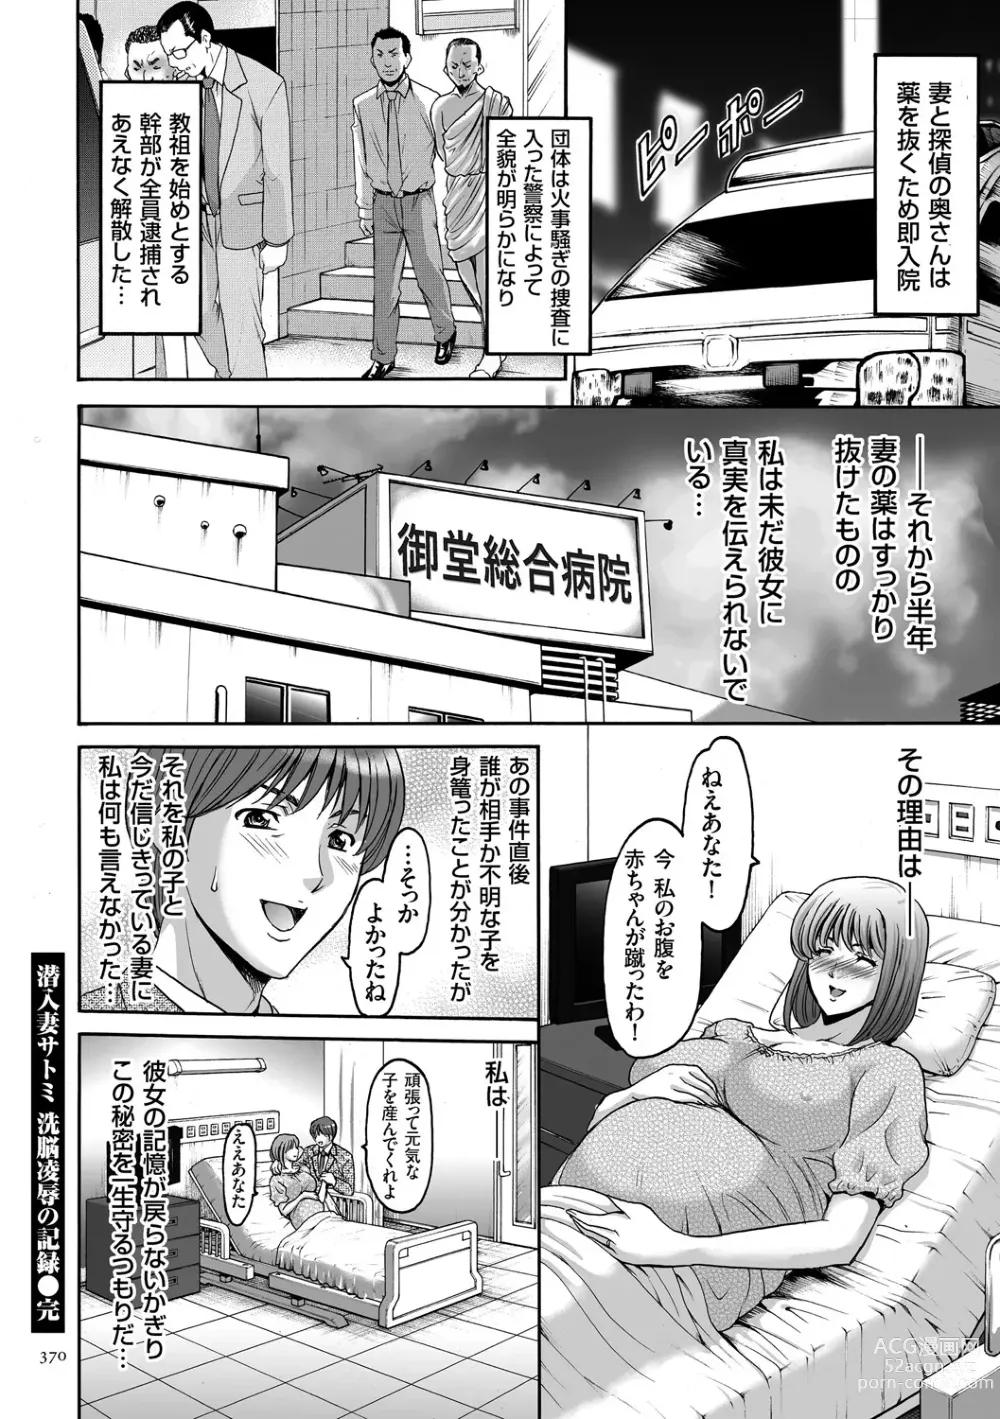 Page 370 of manga Sennyu Tsuma Satomi Kiroku